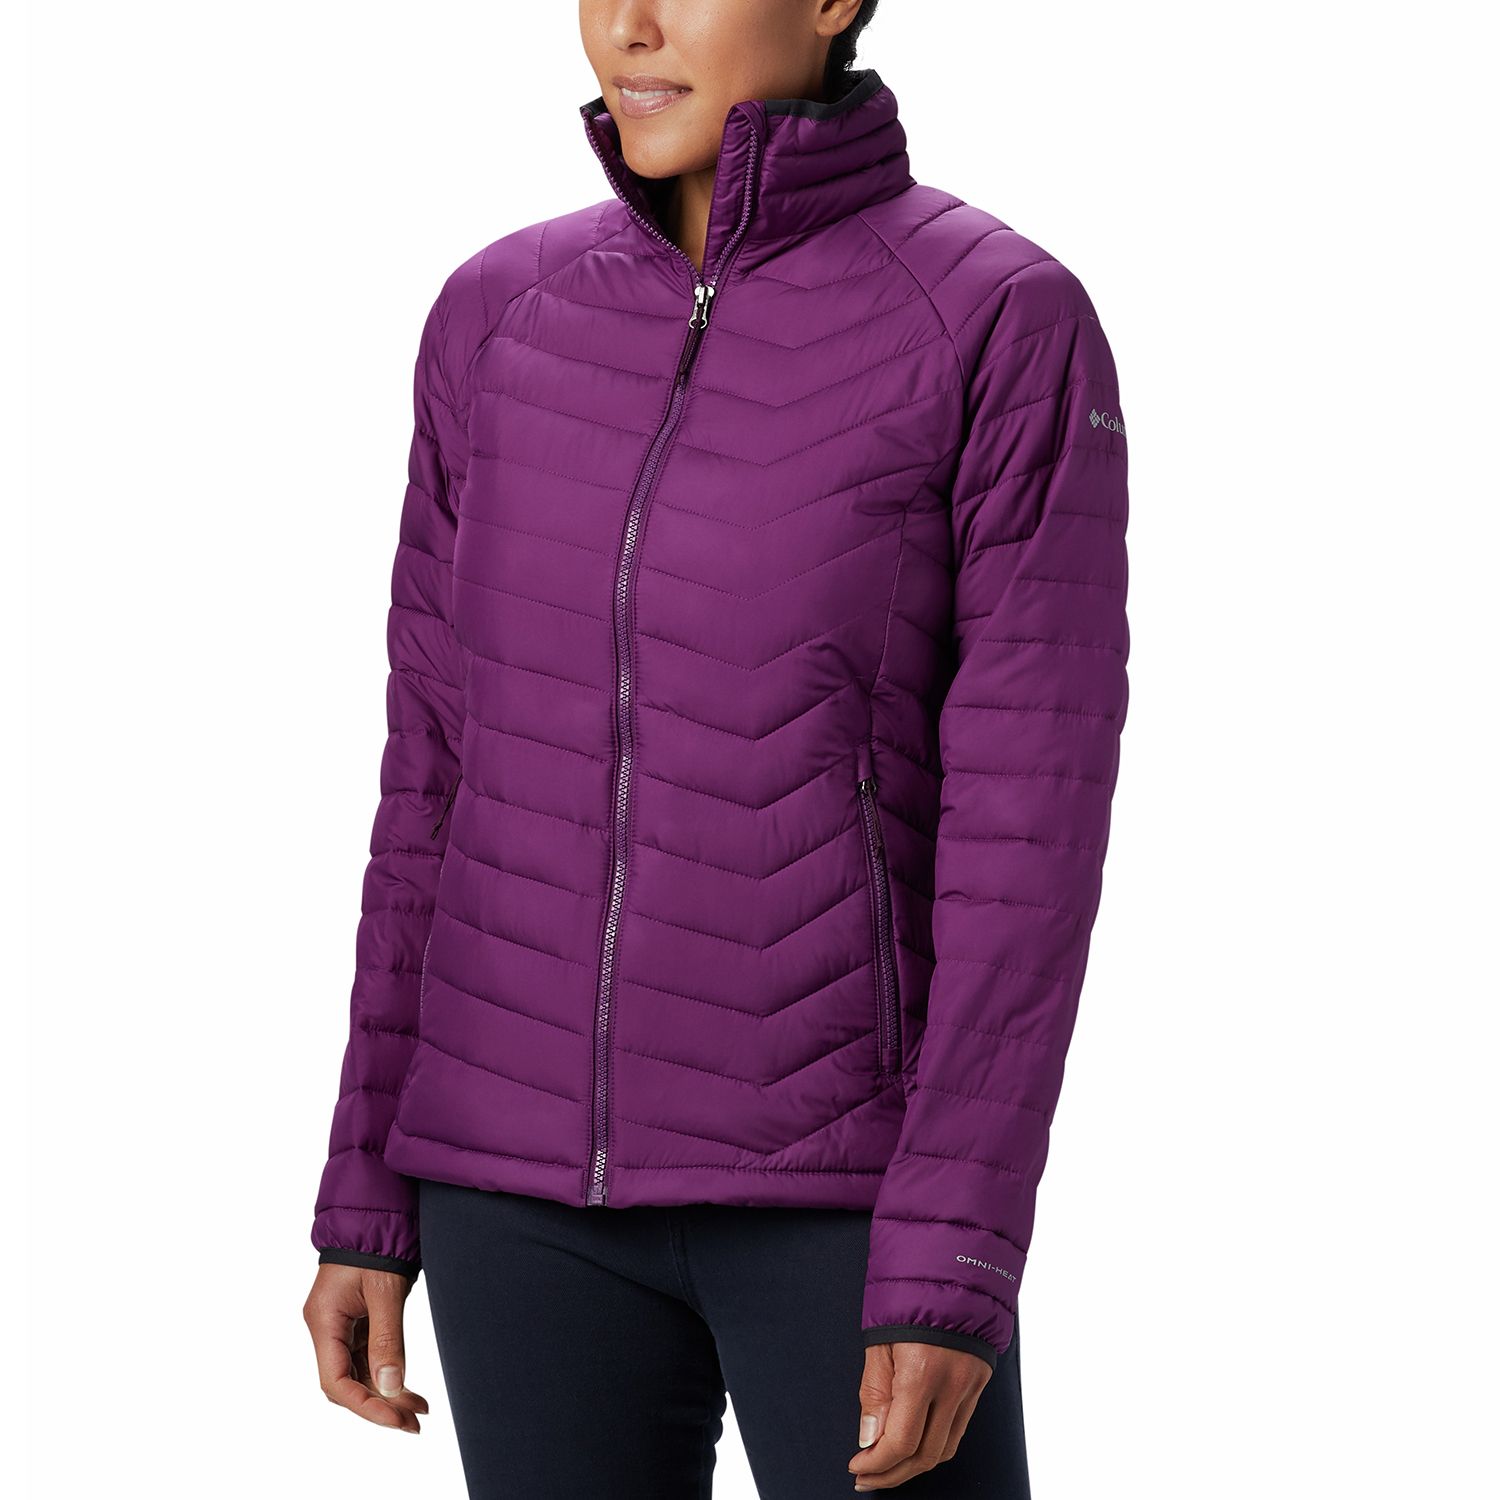 columbia purple puffer jacket